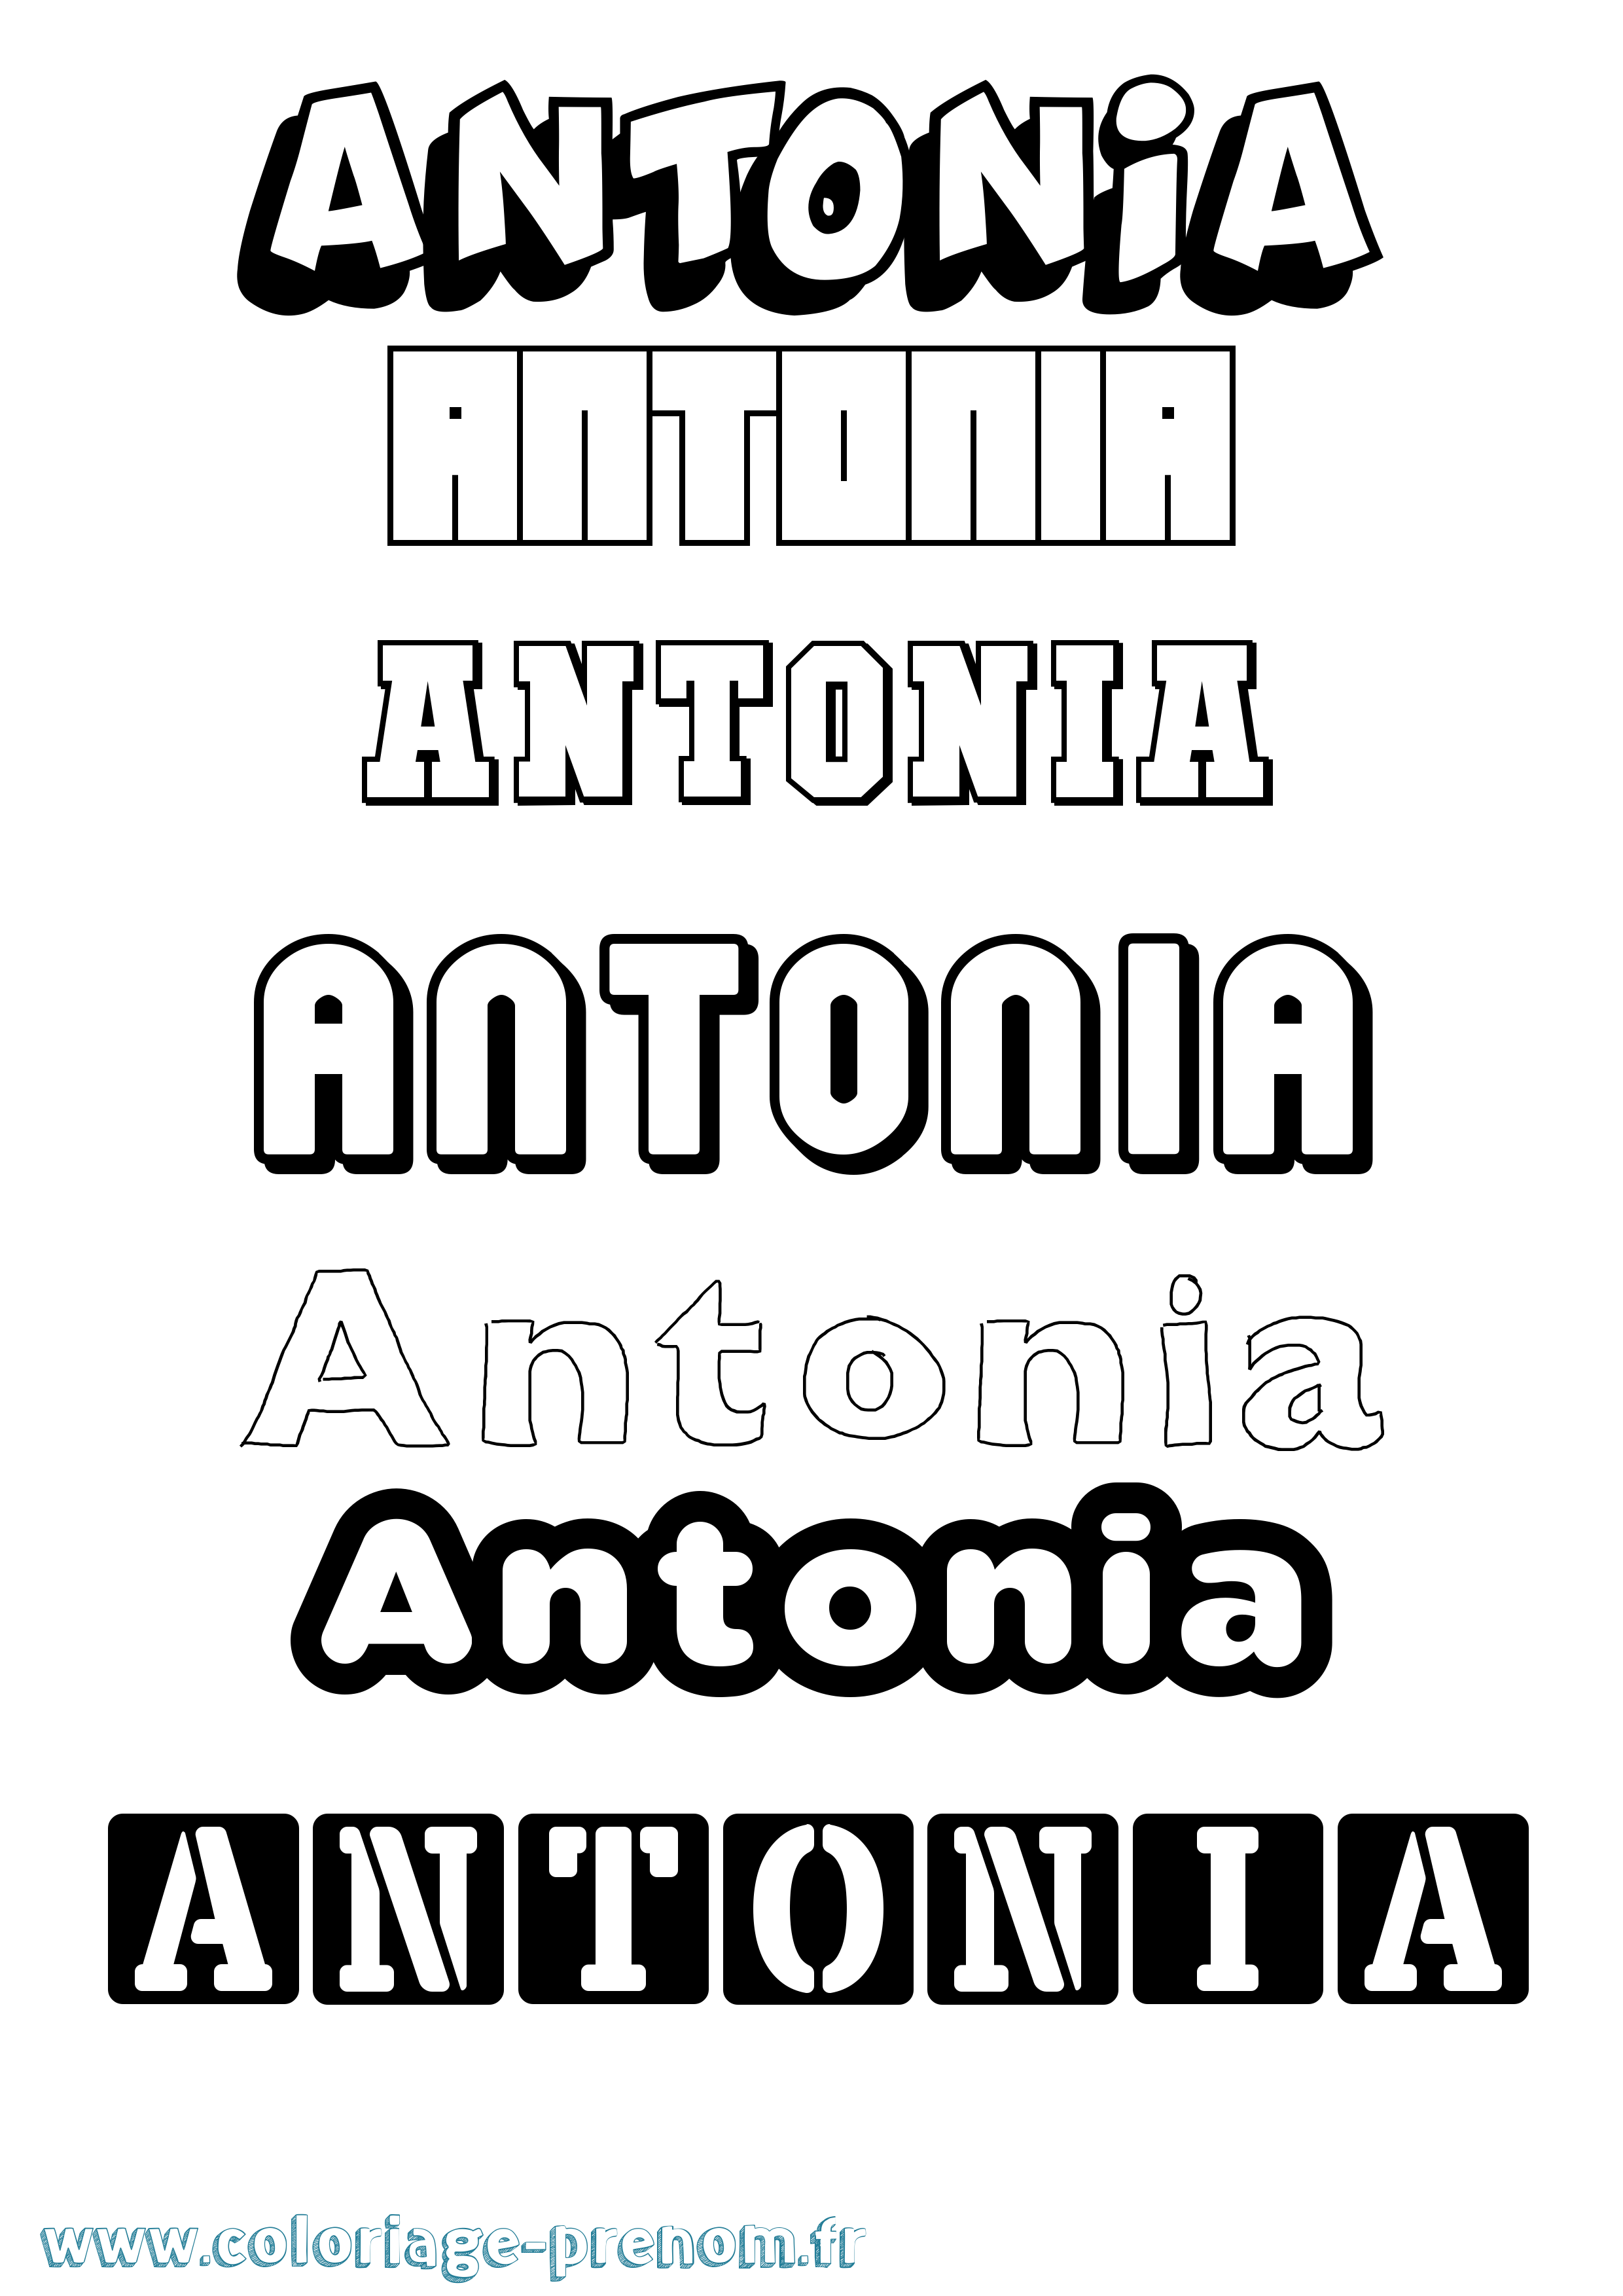 Coloriage prénom Antonia